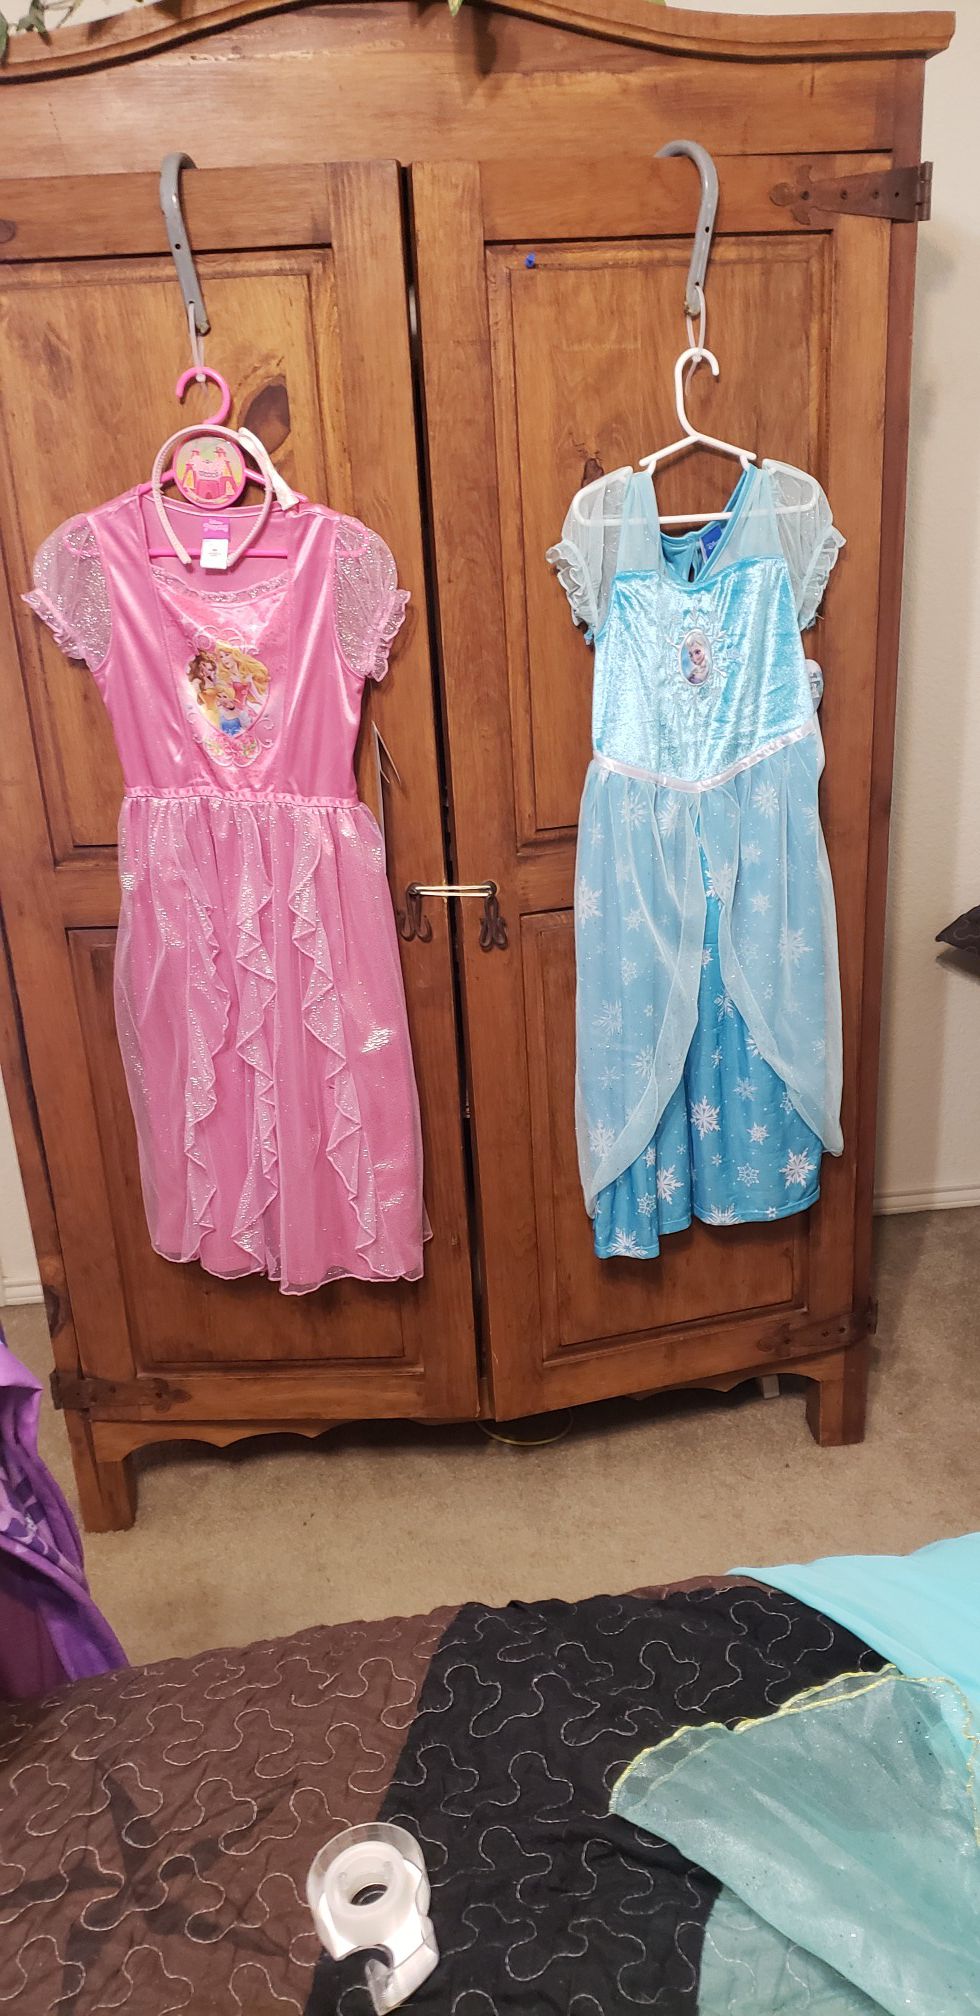 Disney princess dresses size M probably fit kid size 5-7ish